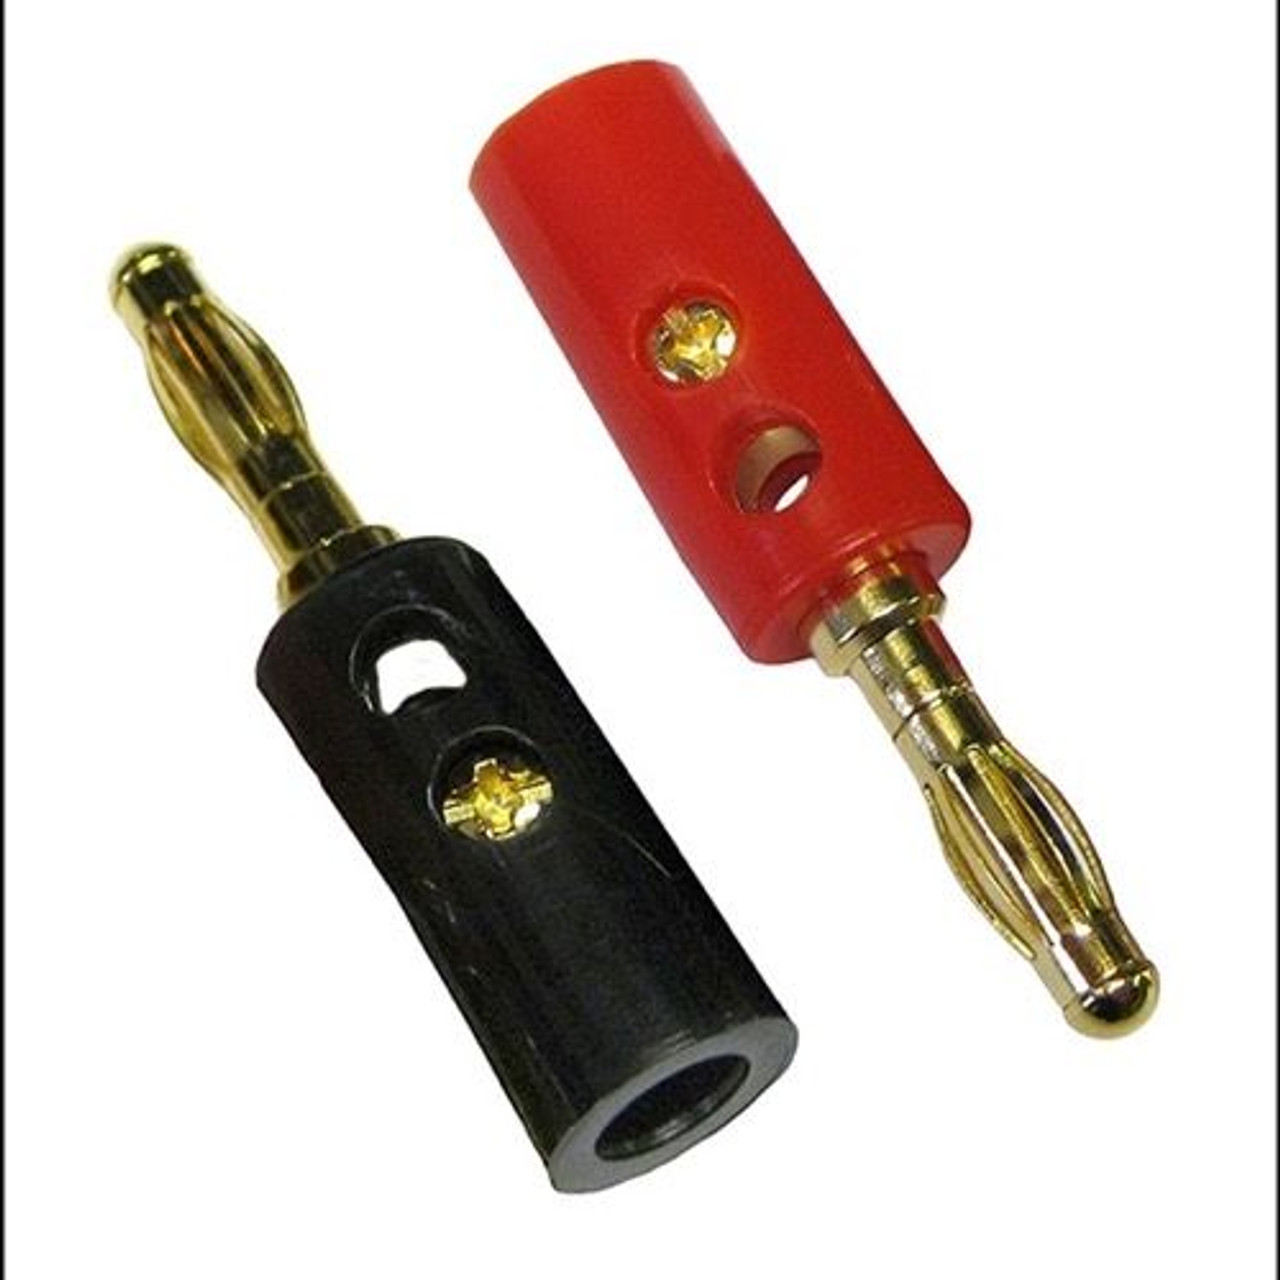 Steren 250-202 2 Pack Banana Plug Set Screw Black Red Pair Gold Tip Speaker Audio Video Connector 12-18 AWG Wire Solderless Easy Hook Up Stackable Speaker Jack Connectors Banana Plug, Part # 250202